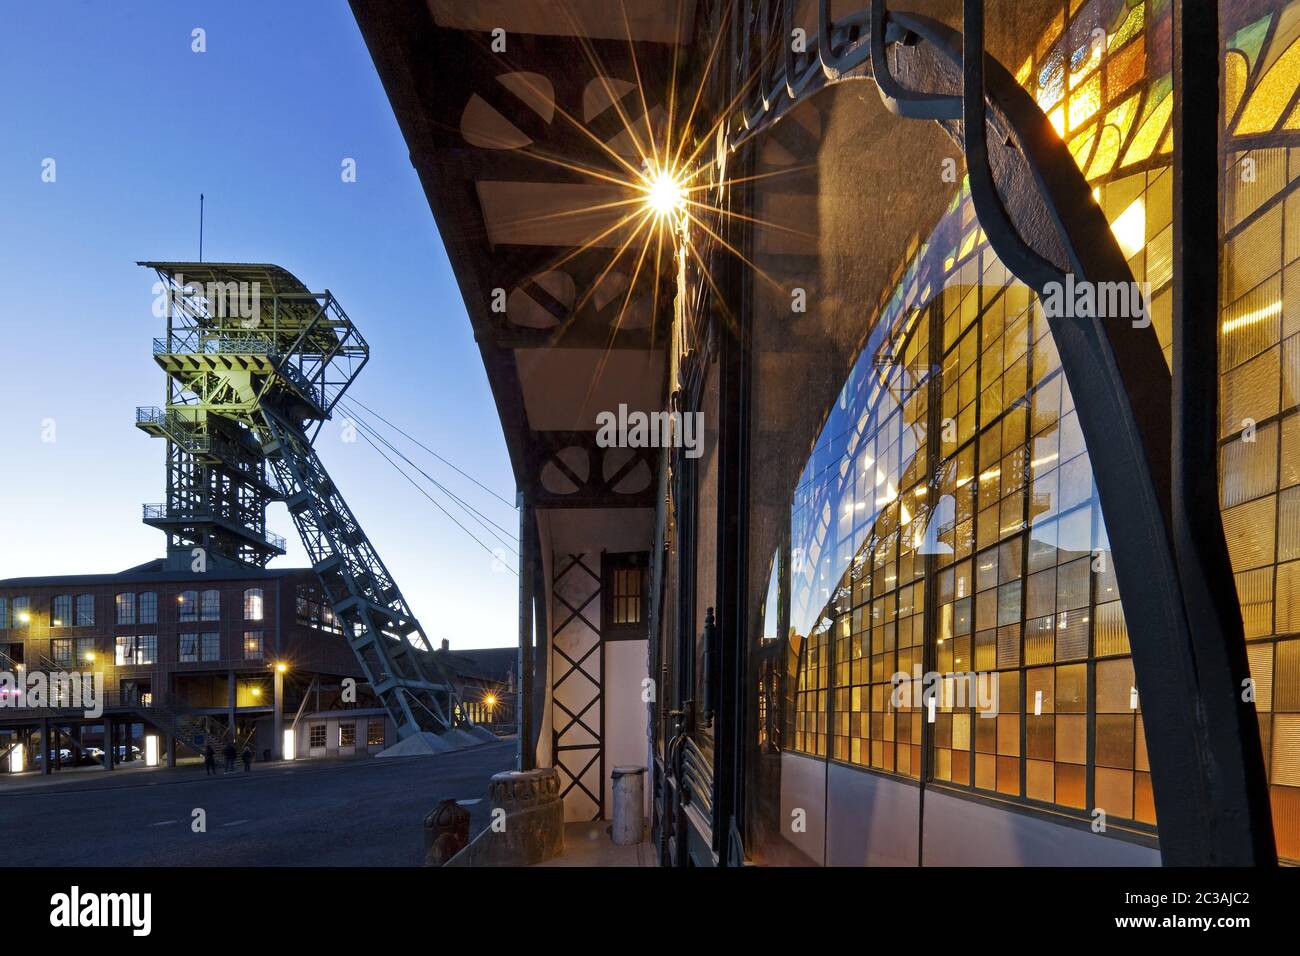 Illuminated machine hall with head frame at twilight, Zeche Zollern, Dortmund, Germany, Europe Stock Photo